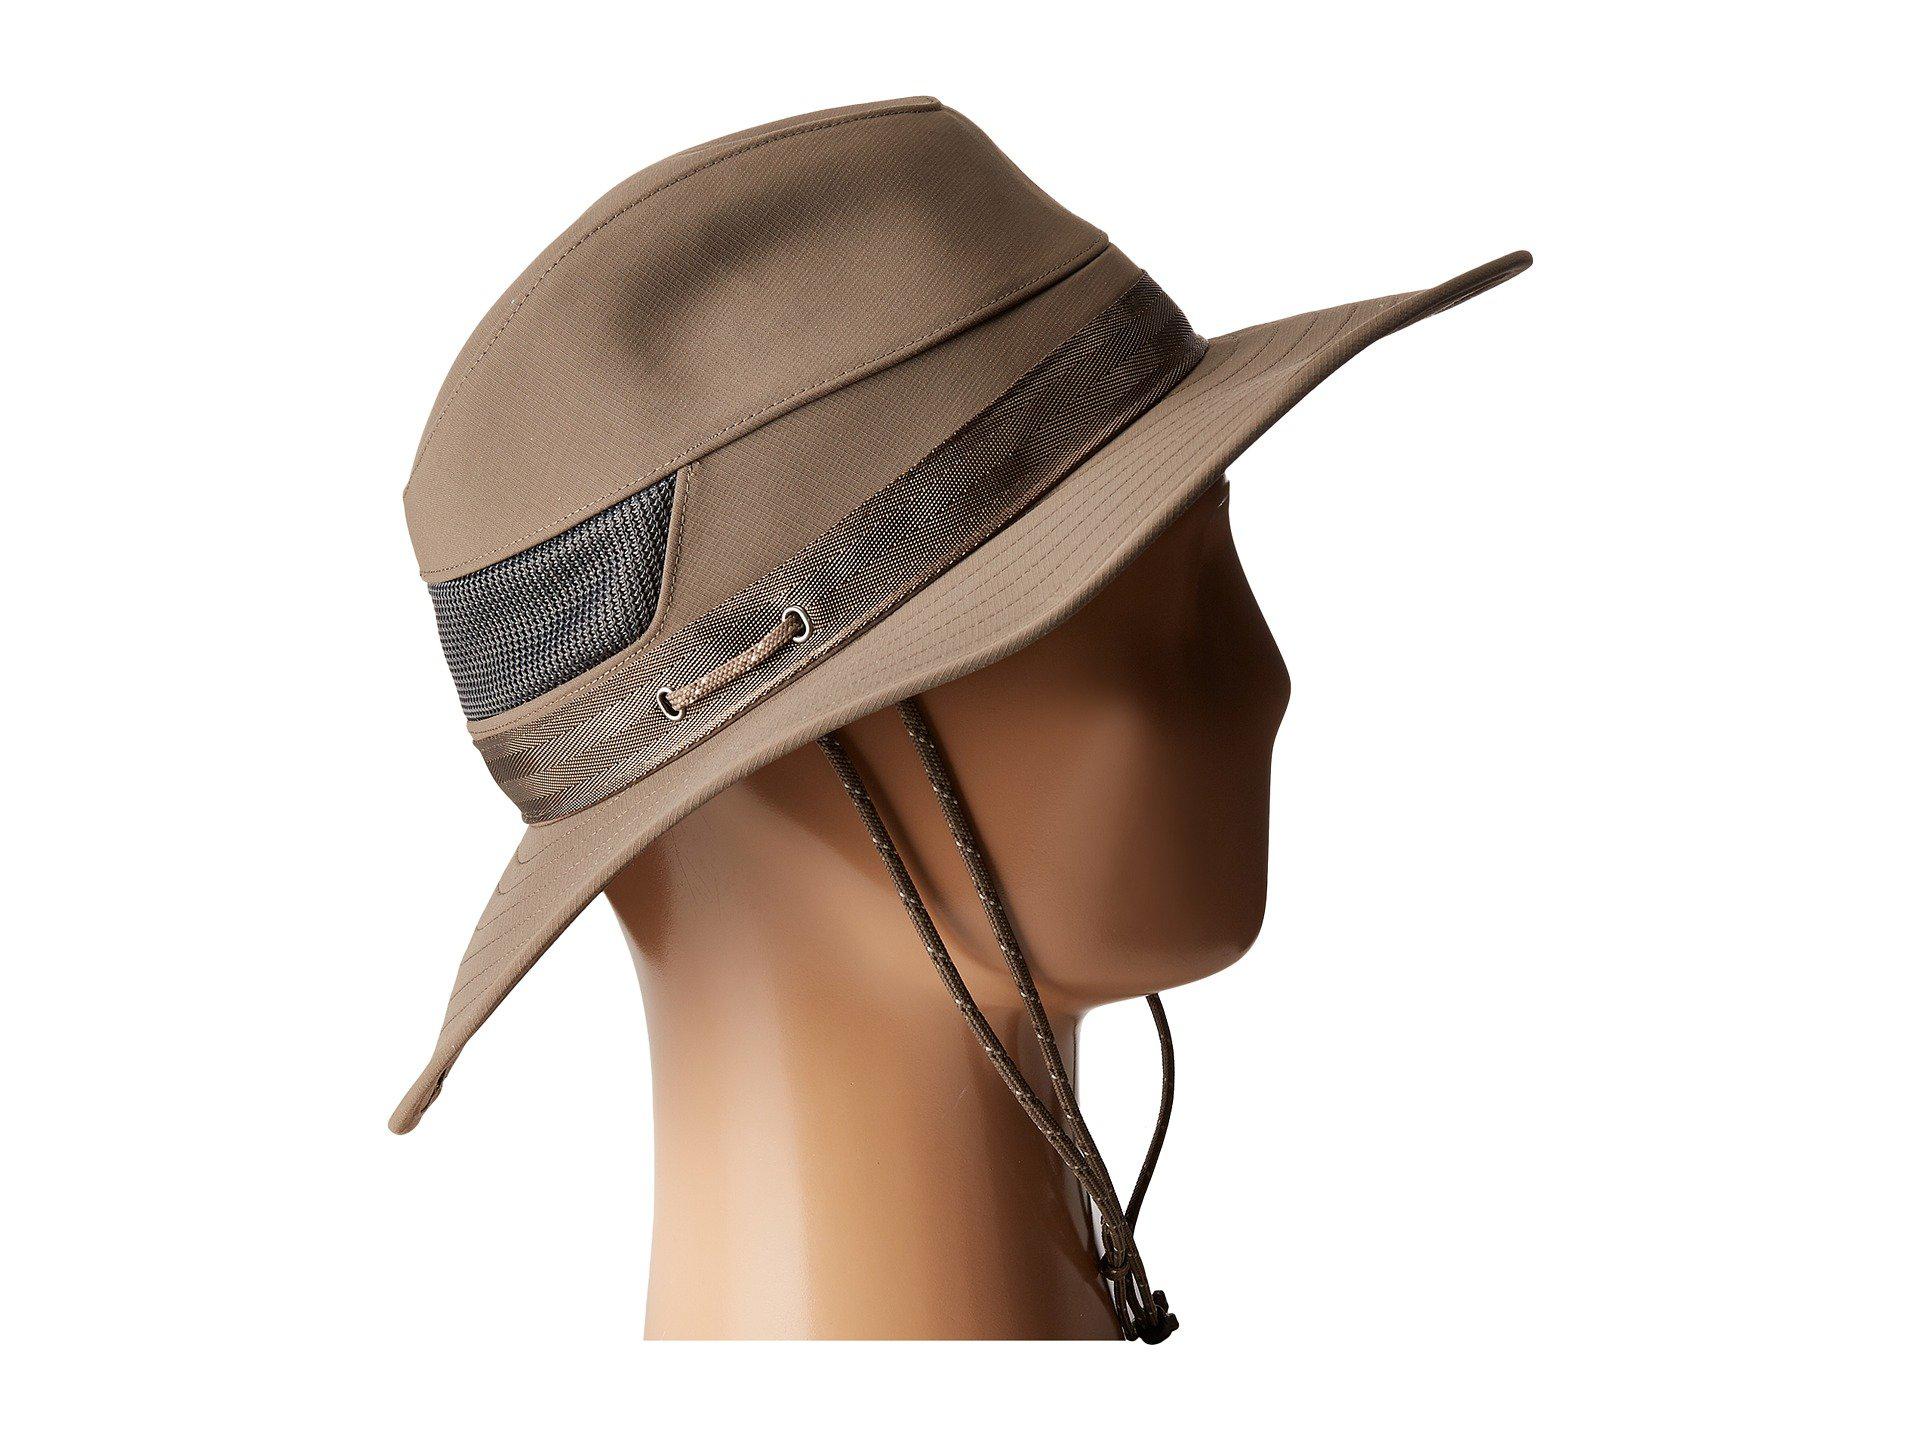 shadowcaster hat